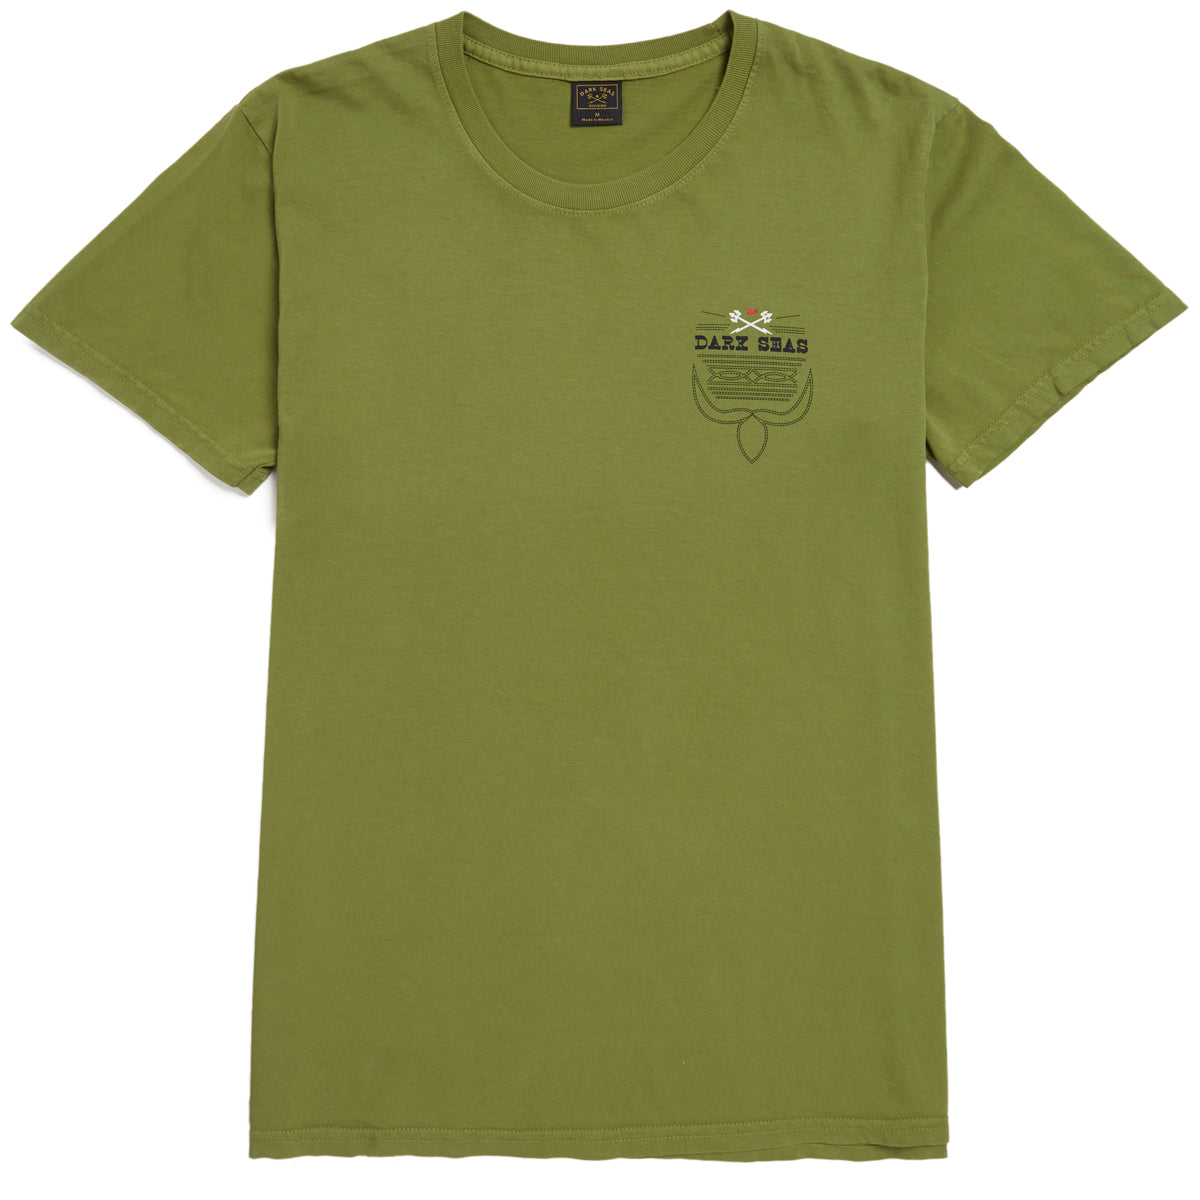 Dark Seas Tumbleweed T-Shirt - Calliste Green image 2